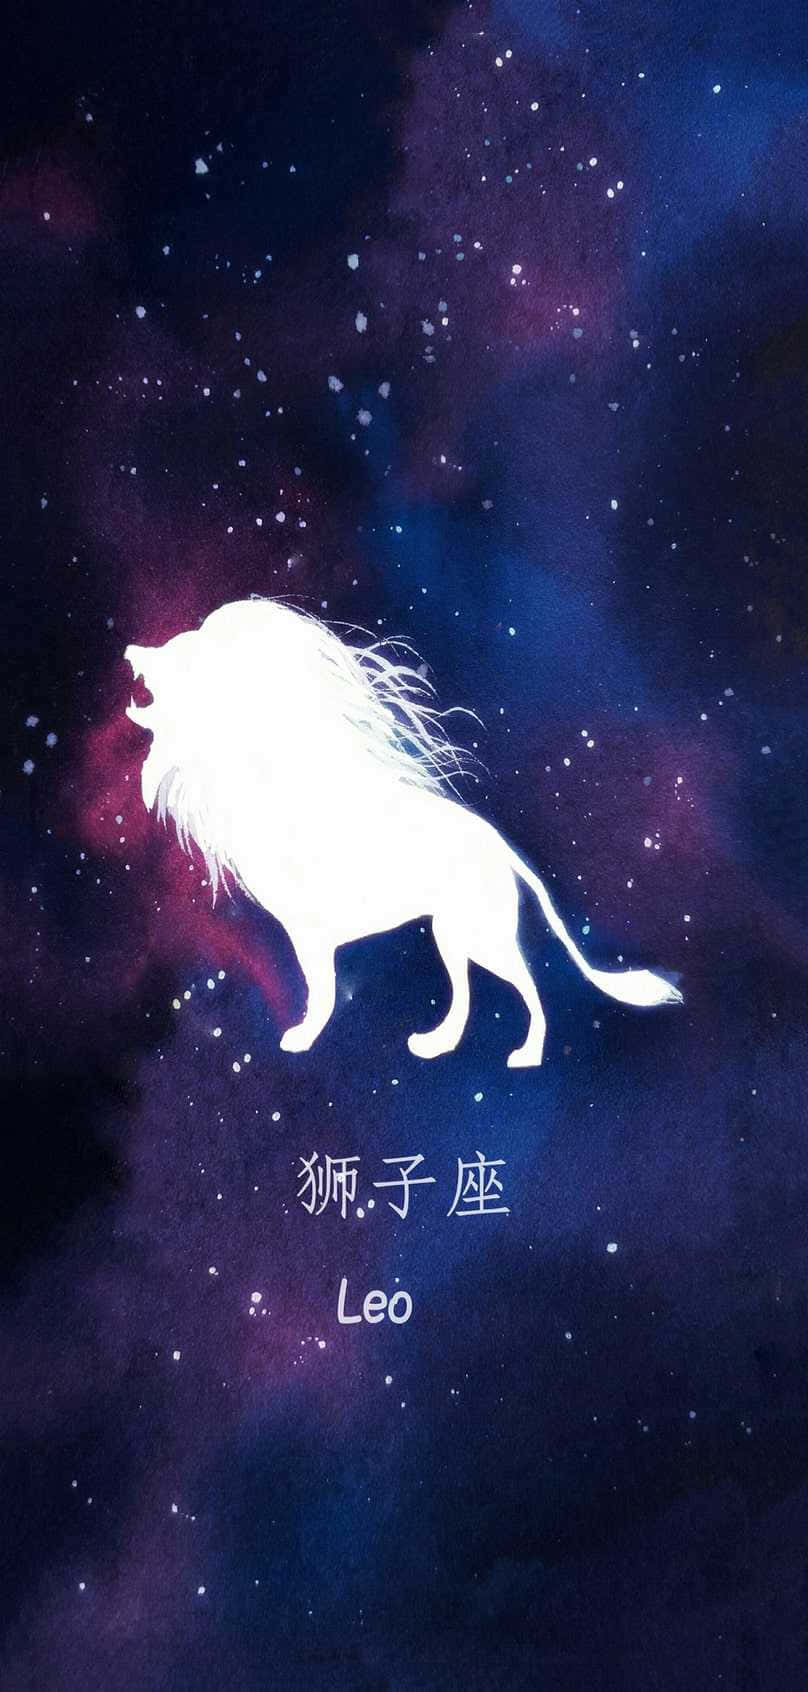 Roaring Leo: A fierce representation of the zodiac sign Leo